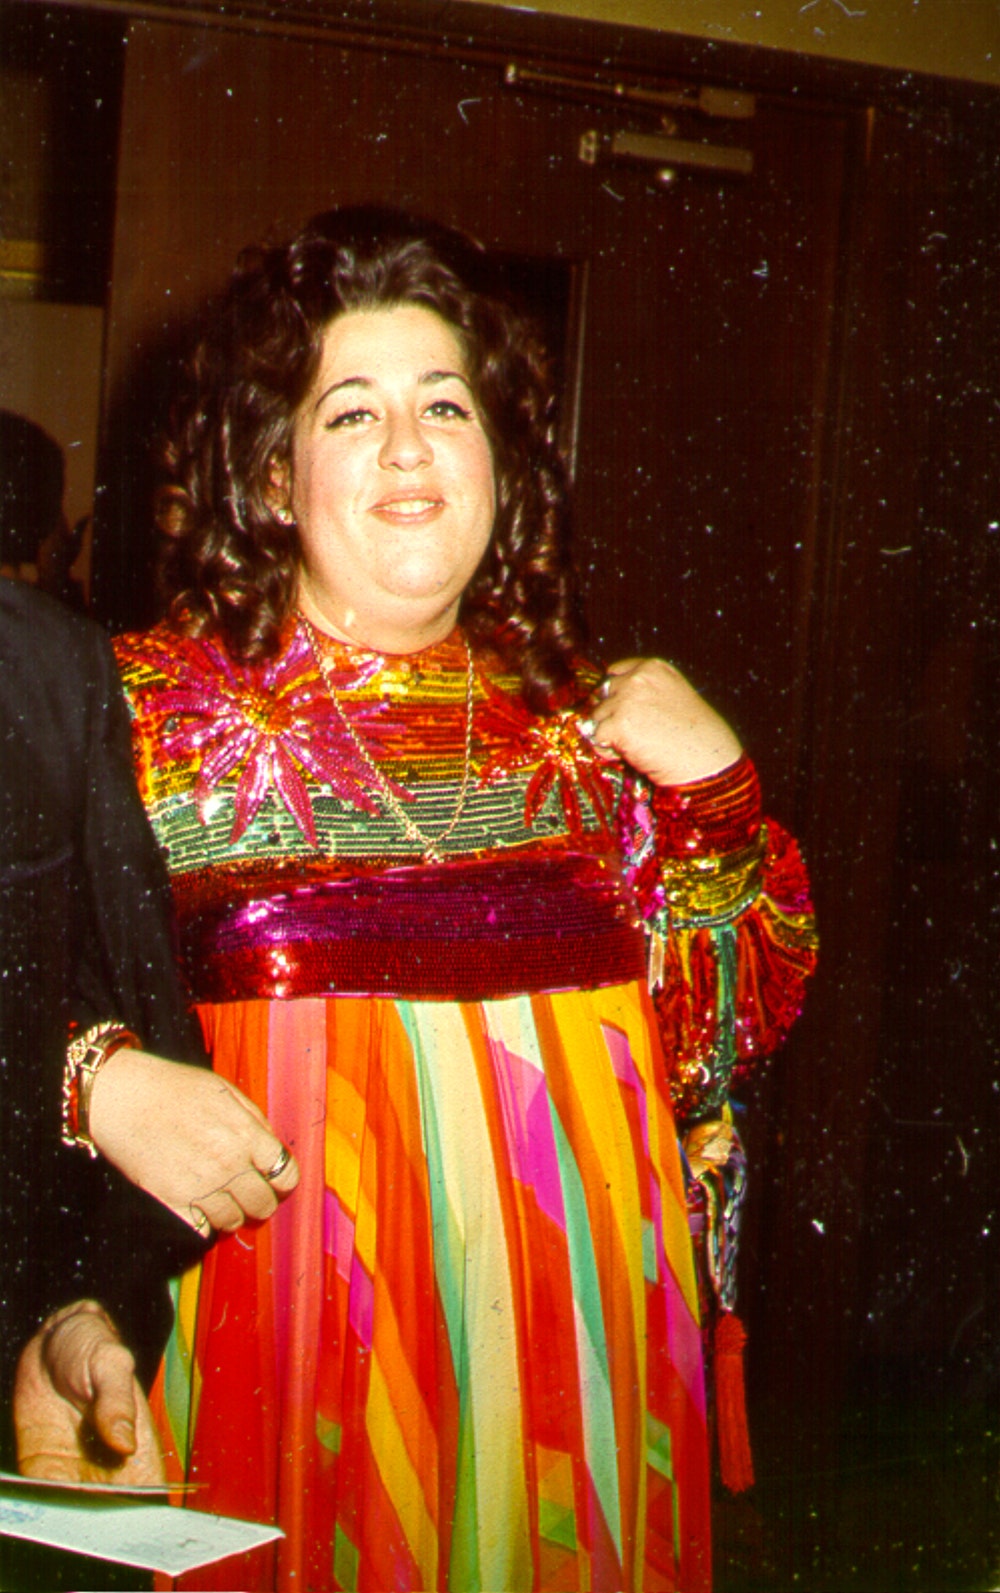 Cass Elliot wearing a colorful dress